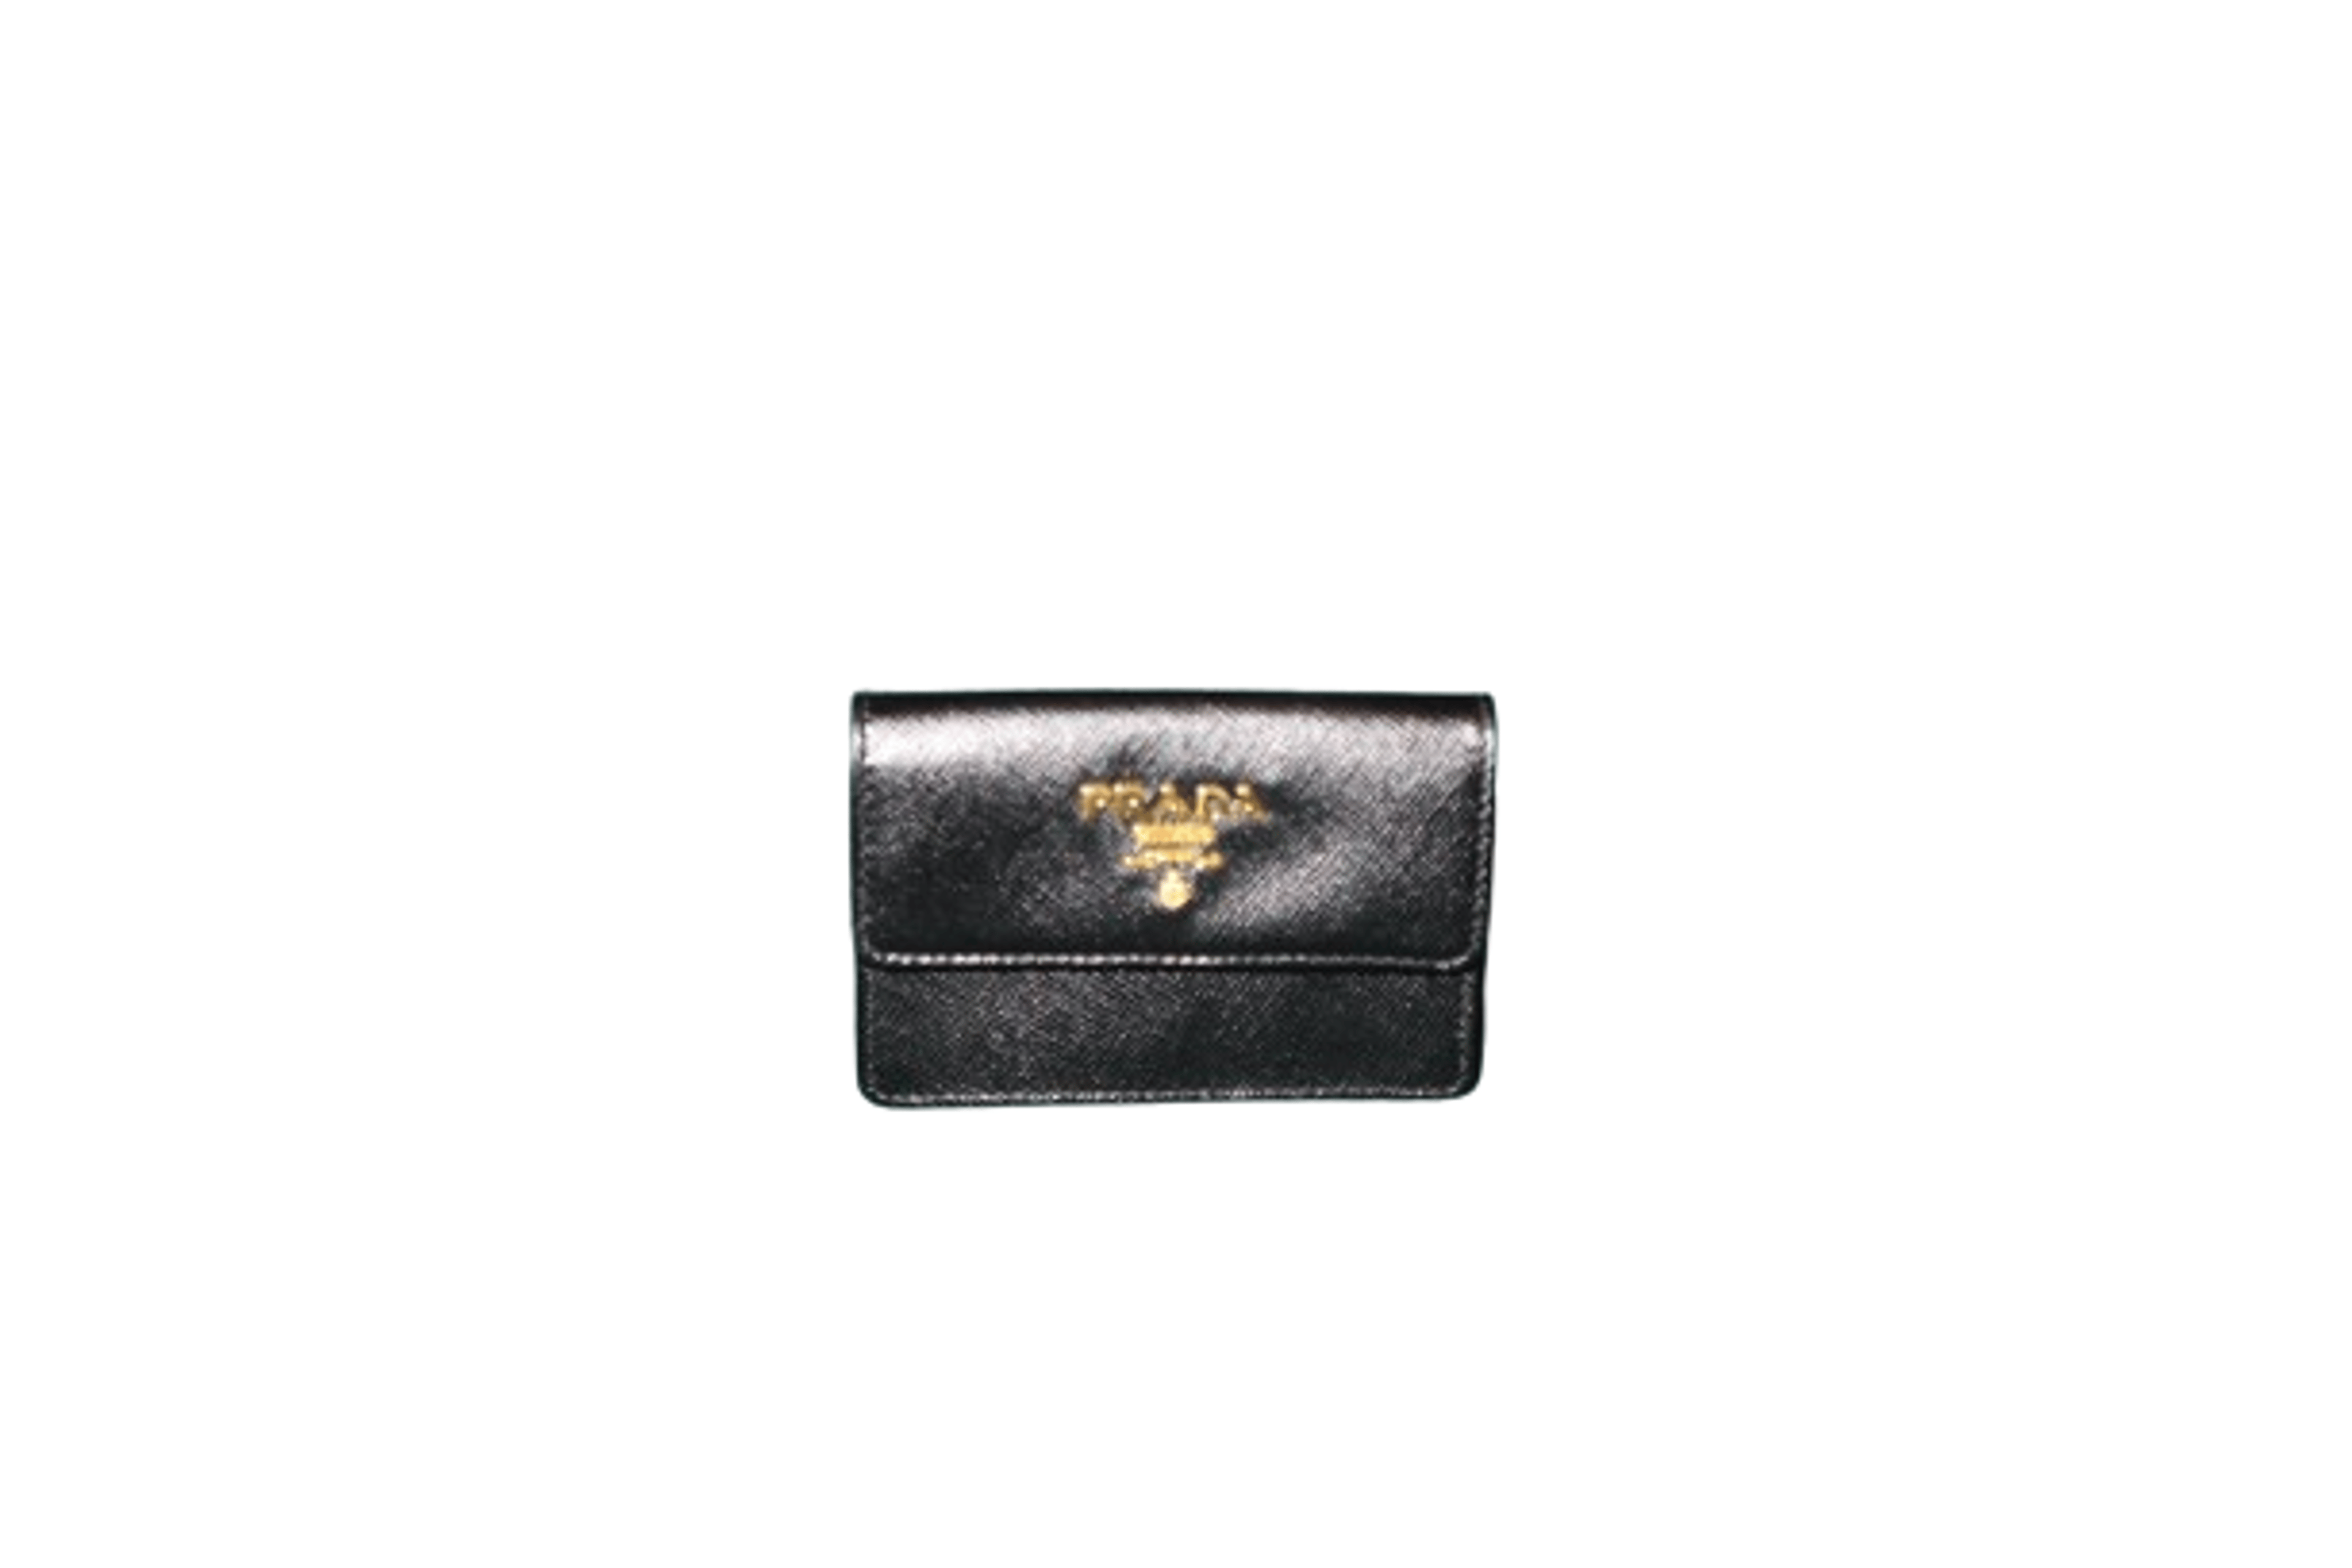 Alternate View 5 of Prada Black Saffiano Leather Flap Card Holder NEW